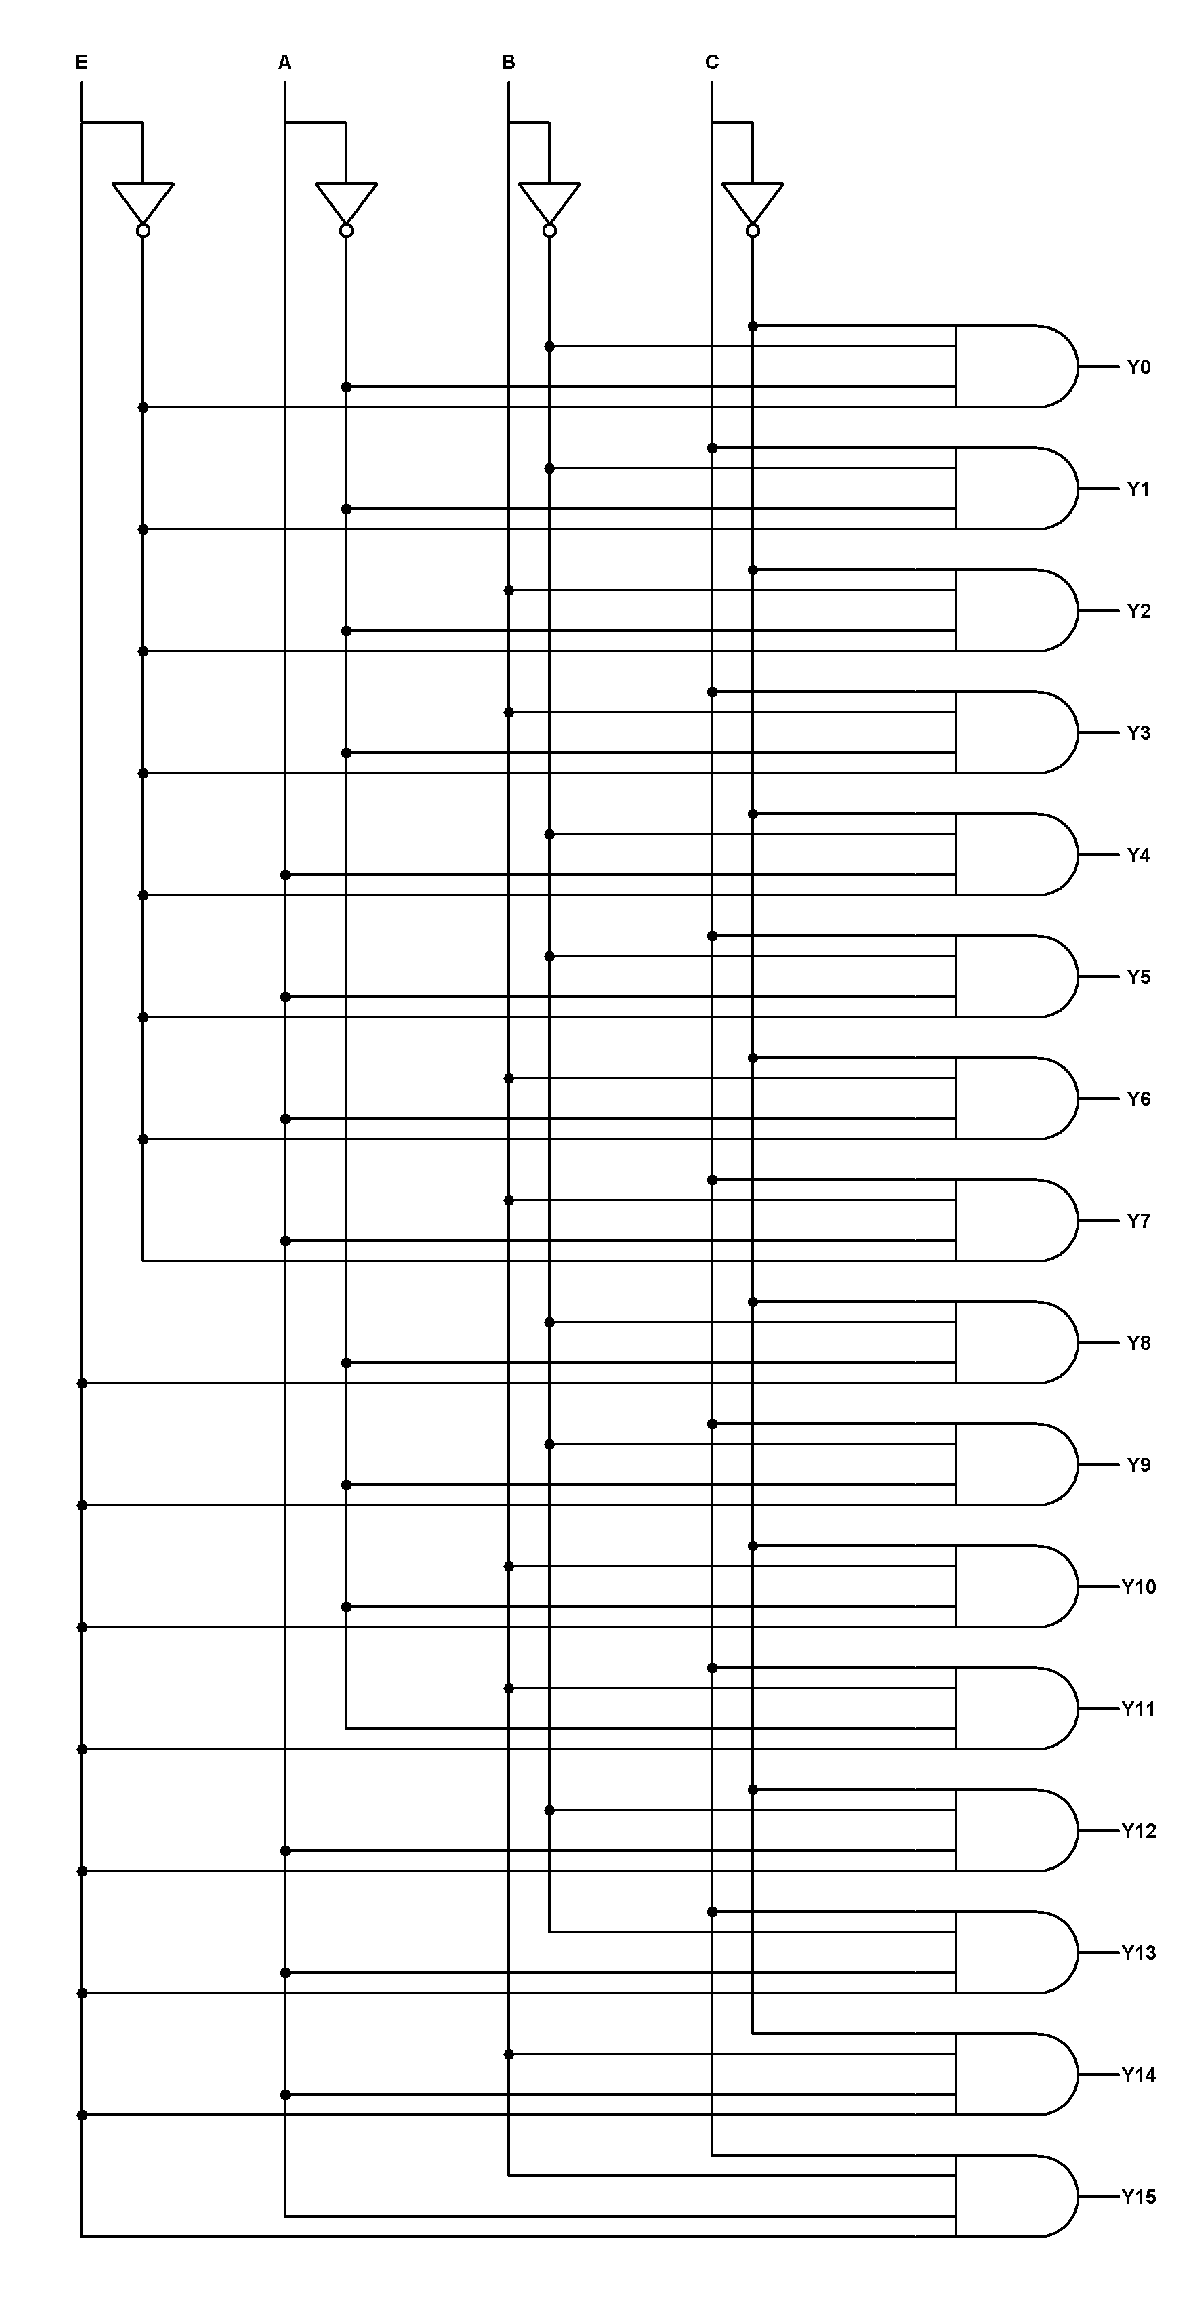 4 hanggang 16 Decoder Circuit